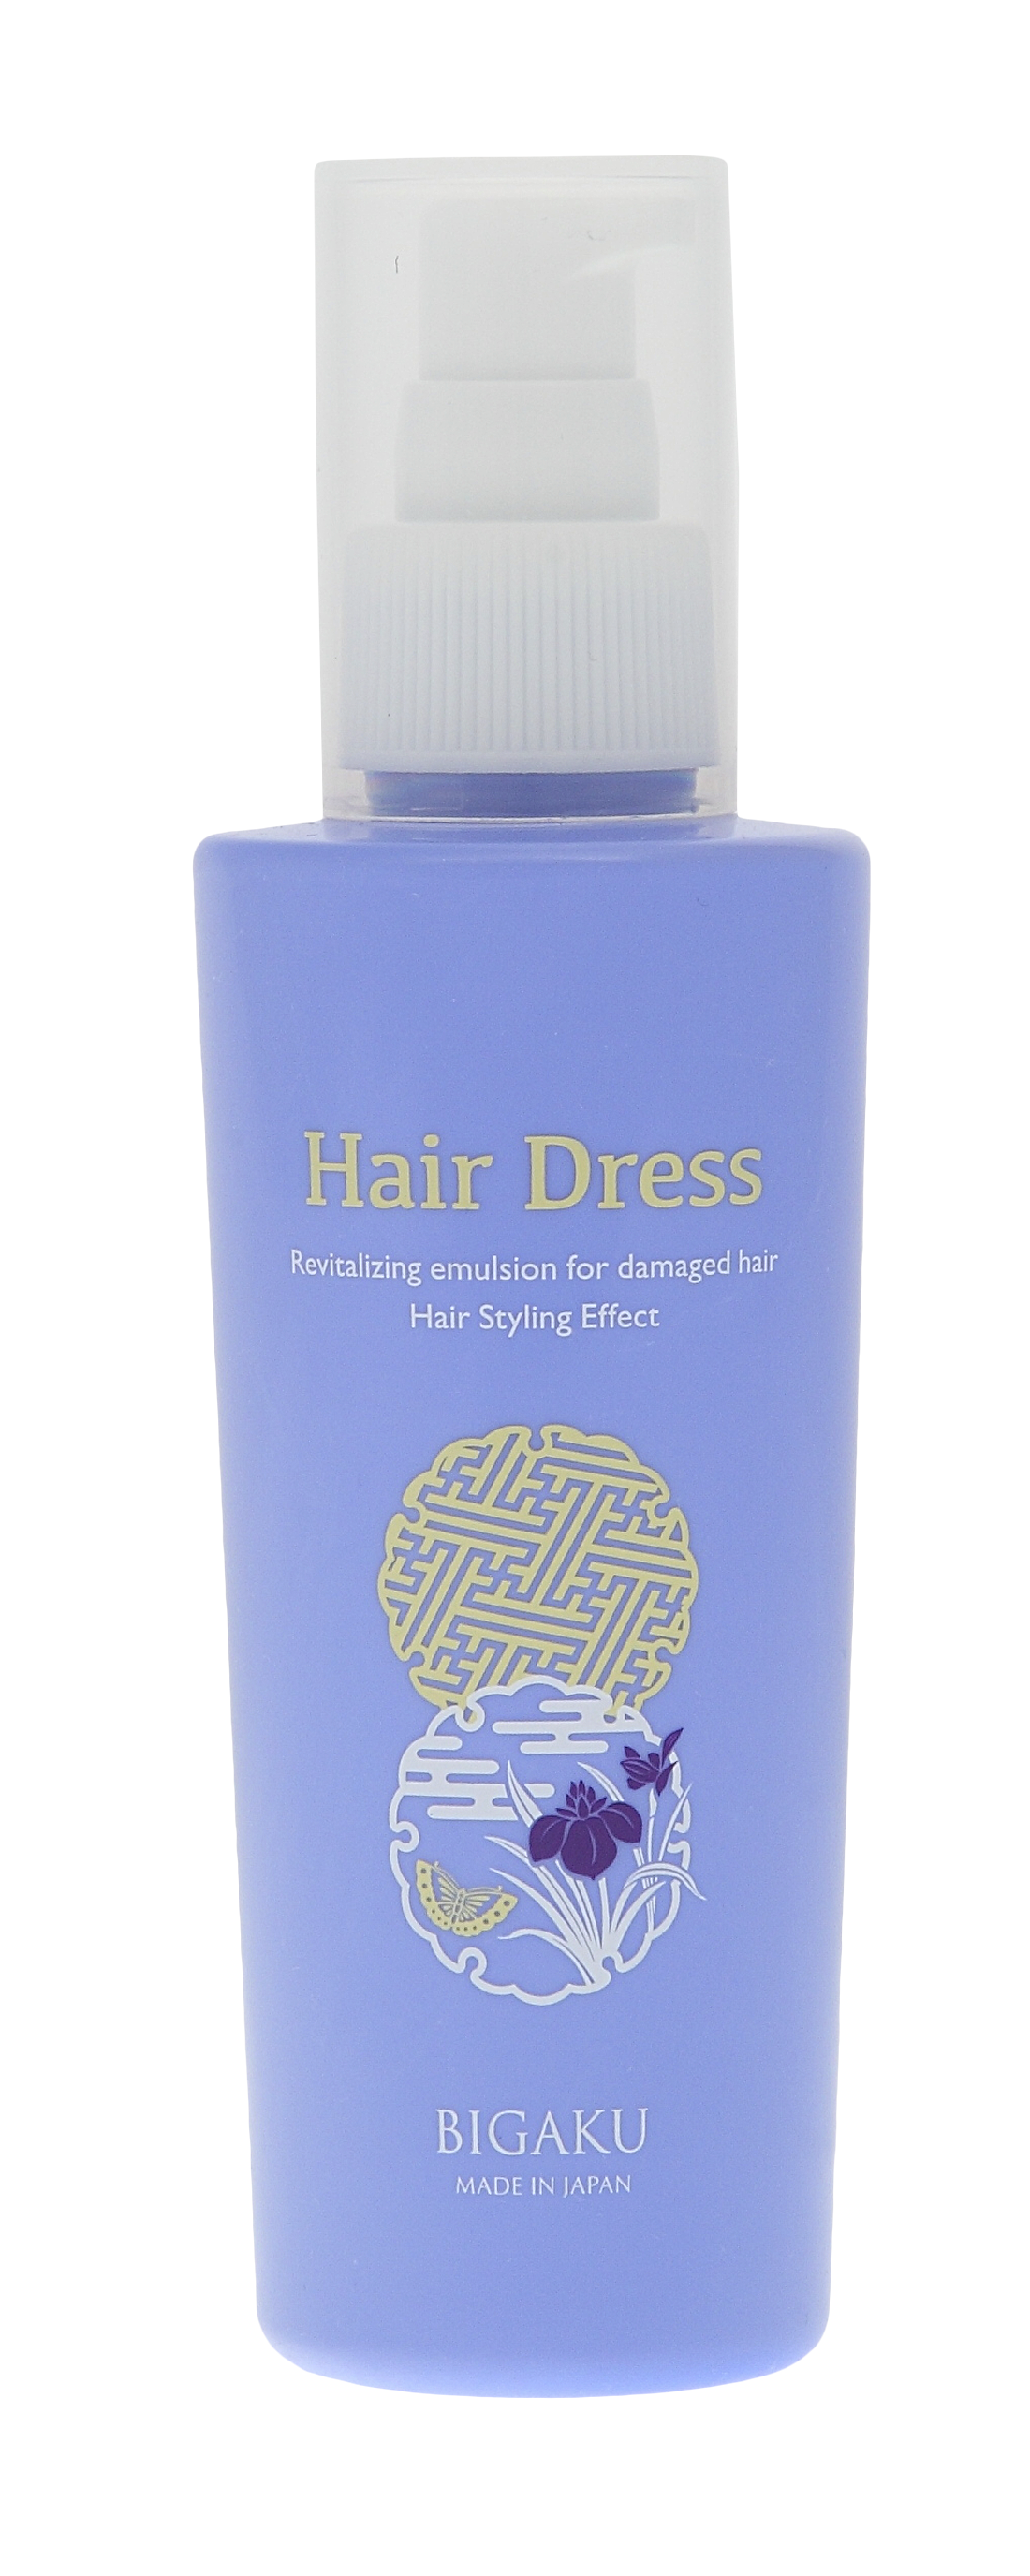 Hair Dress Revitalizing Emulsion For Damaged Hair восстанавливающая эмульсия Одежда для волос, 150мл